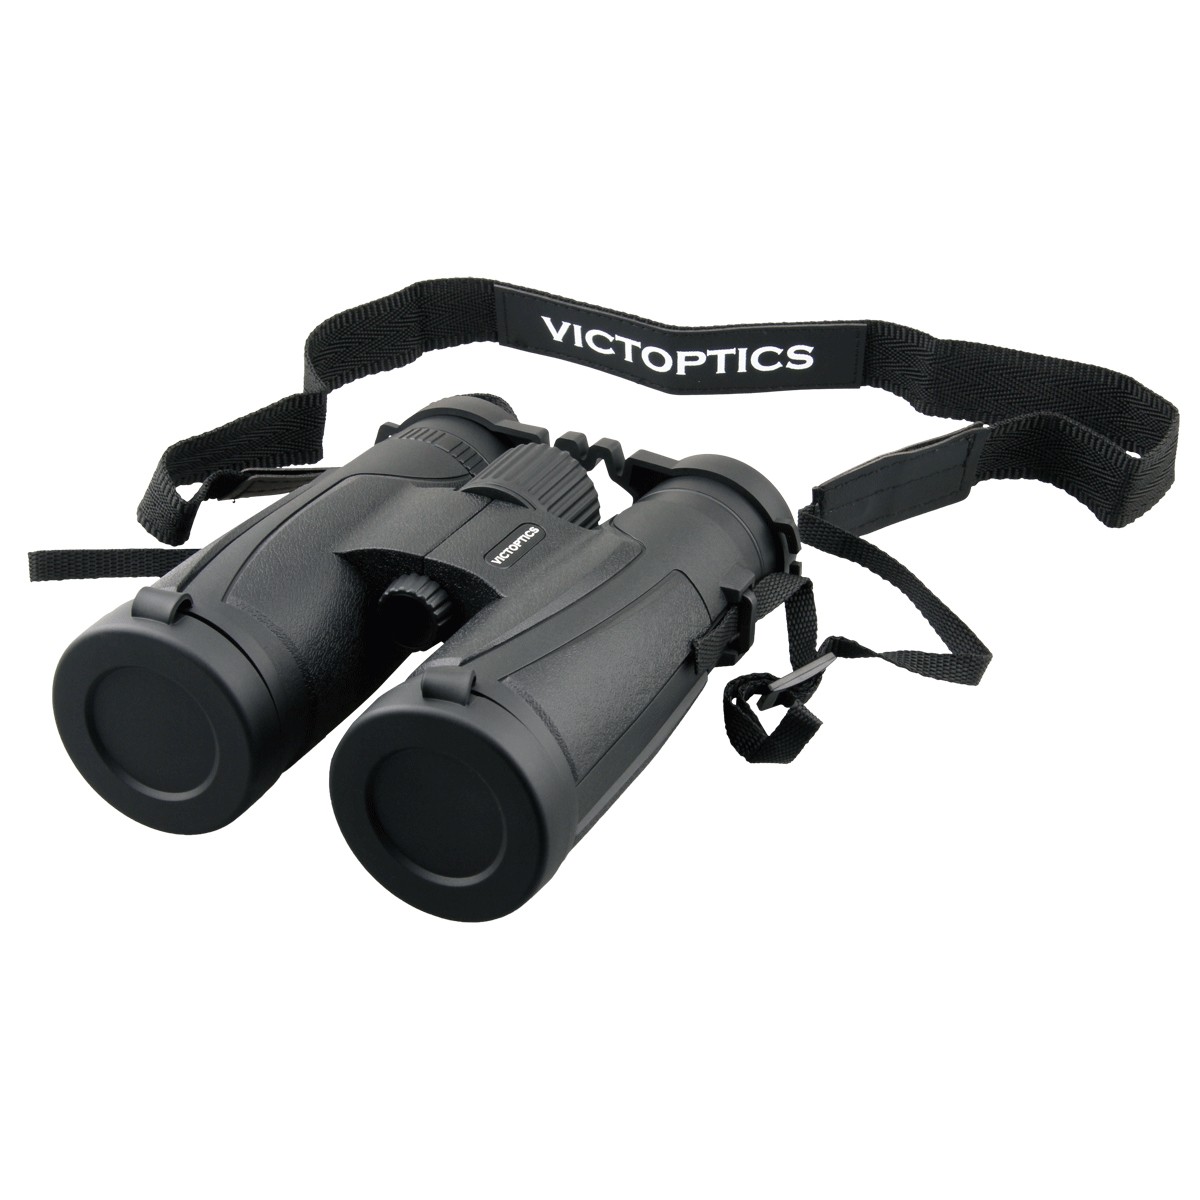 Victoptics 10x42 Binocular